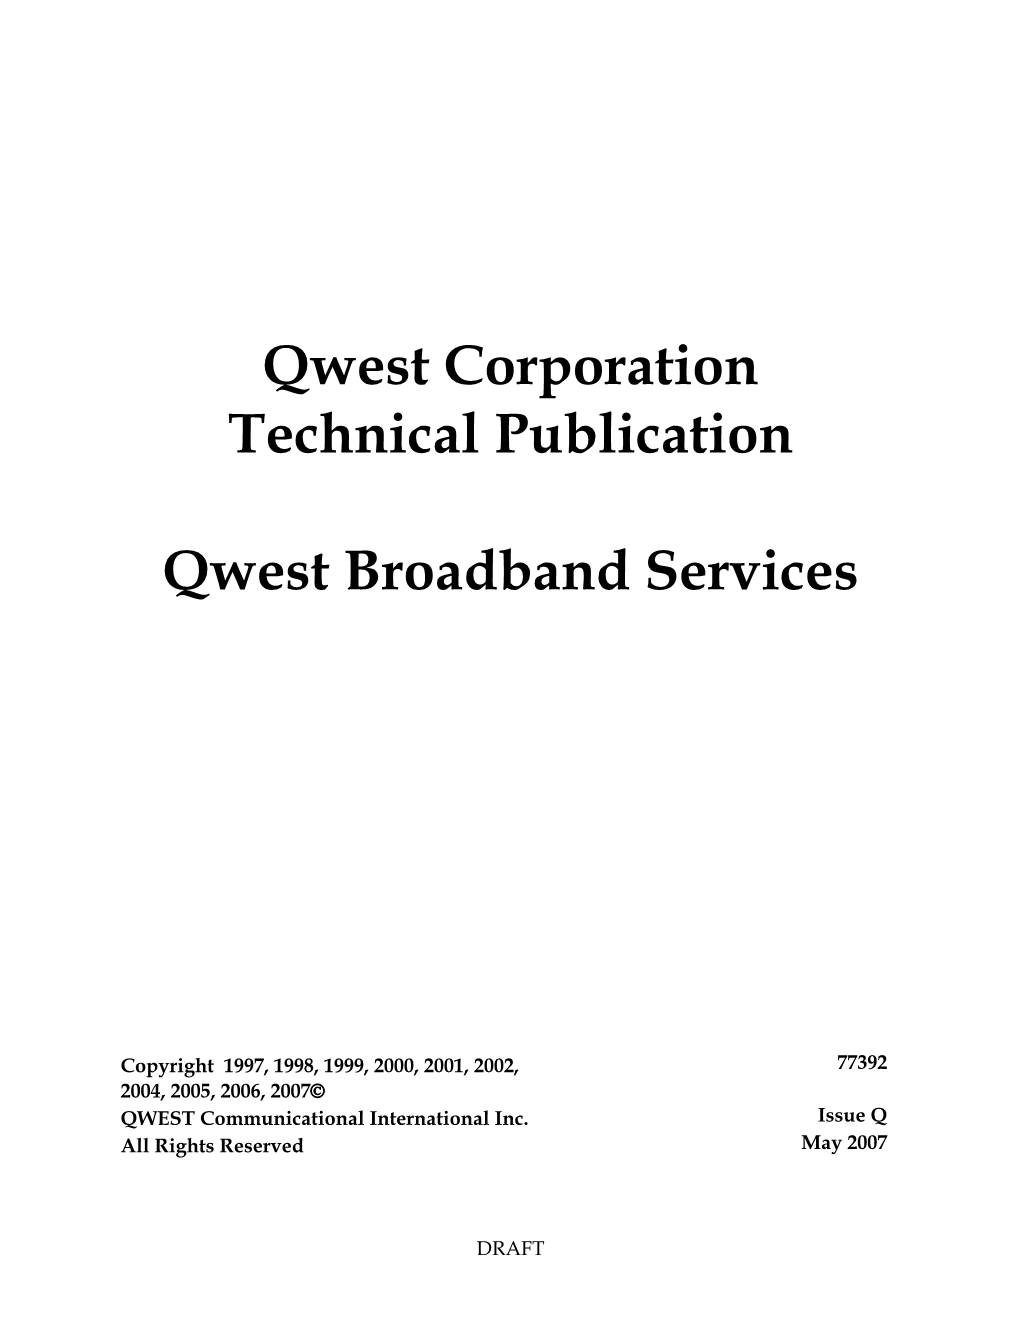 77392, Qwest Broadband Services